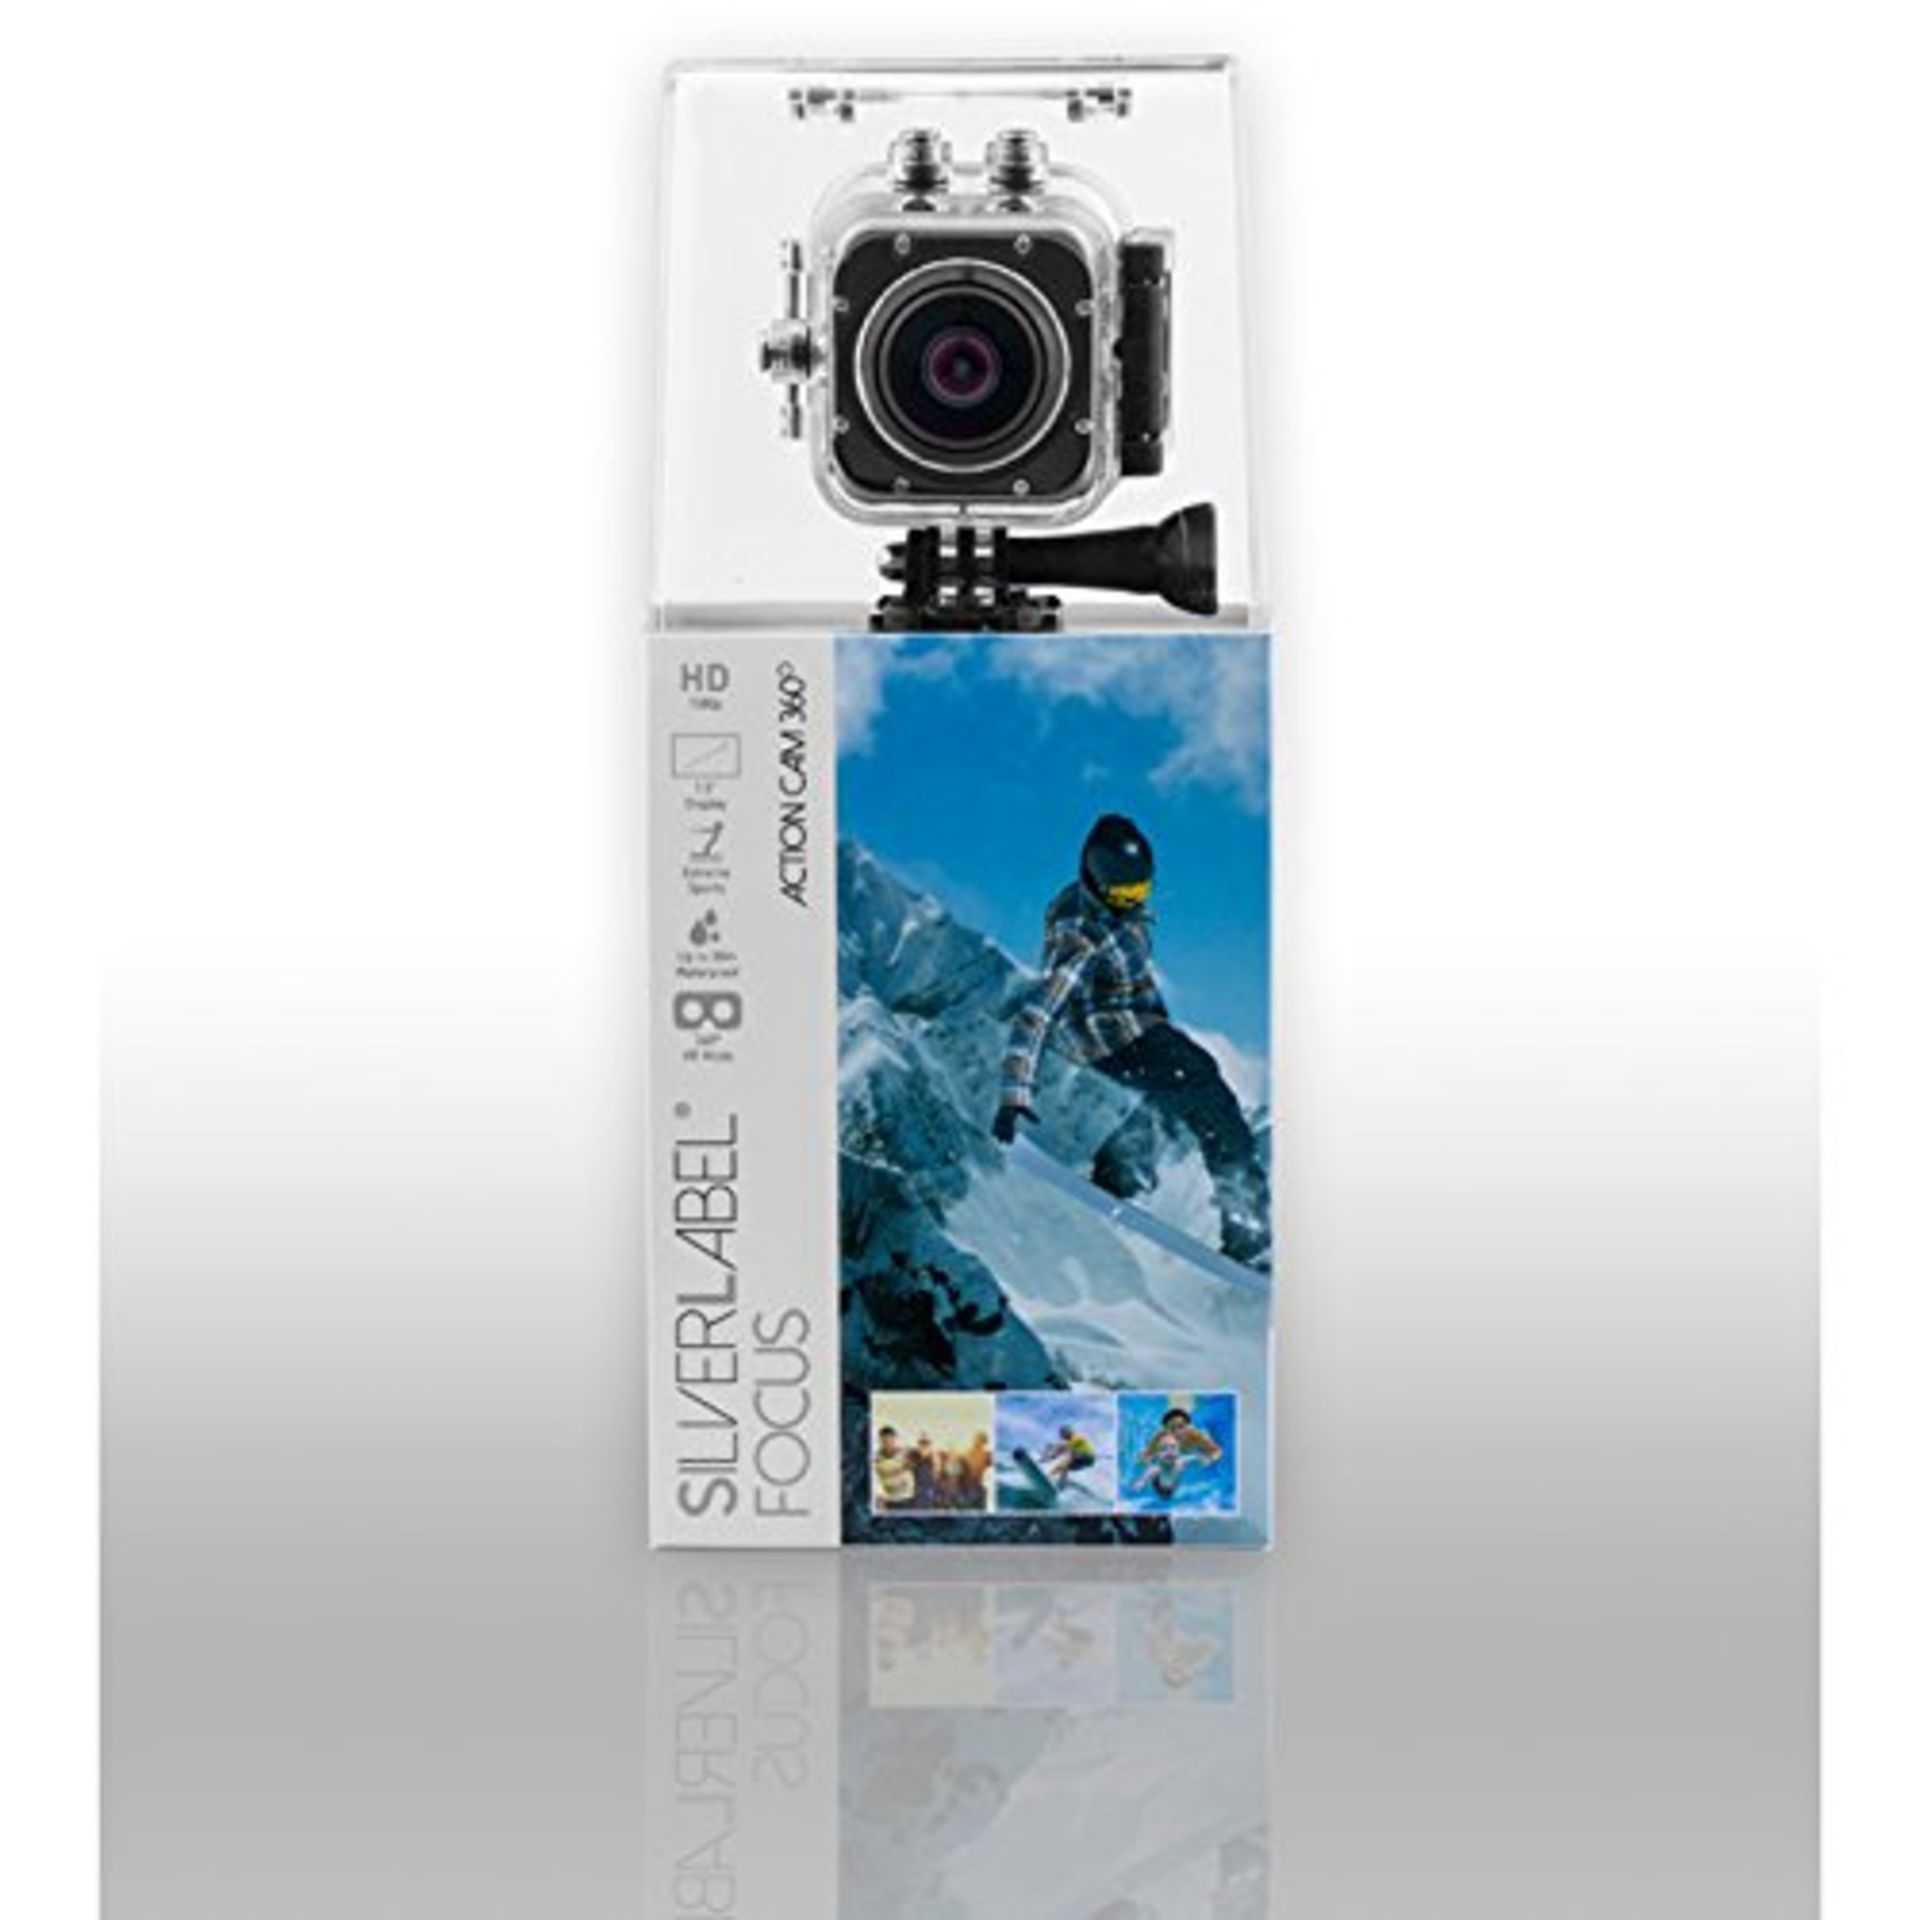 Silverlabel Focus Action Cam 720p | RRP £20.00